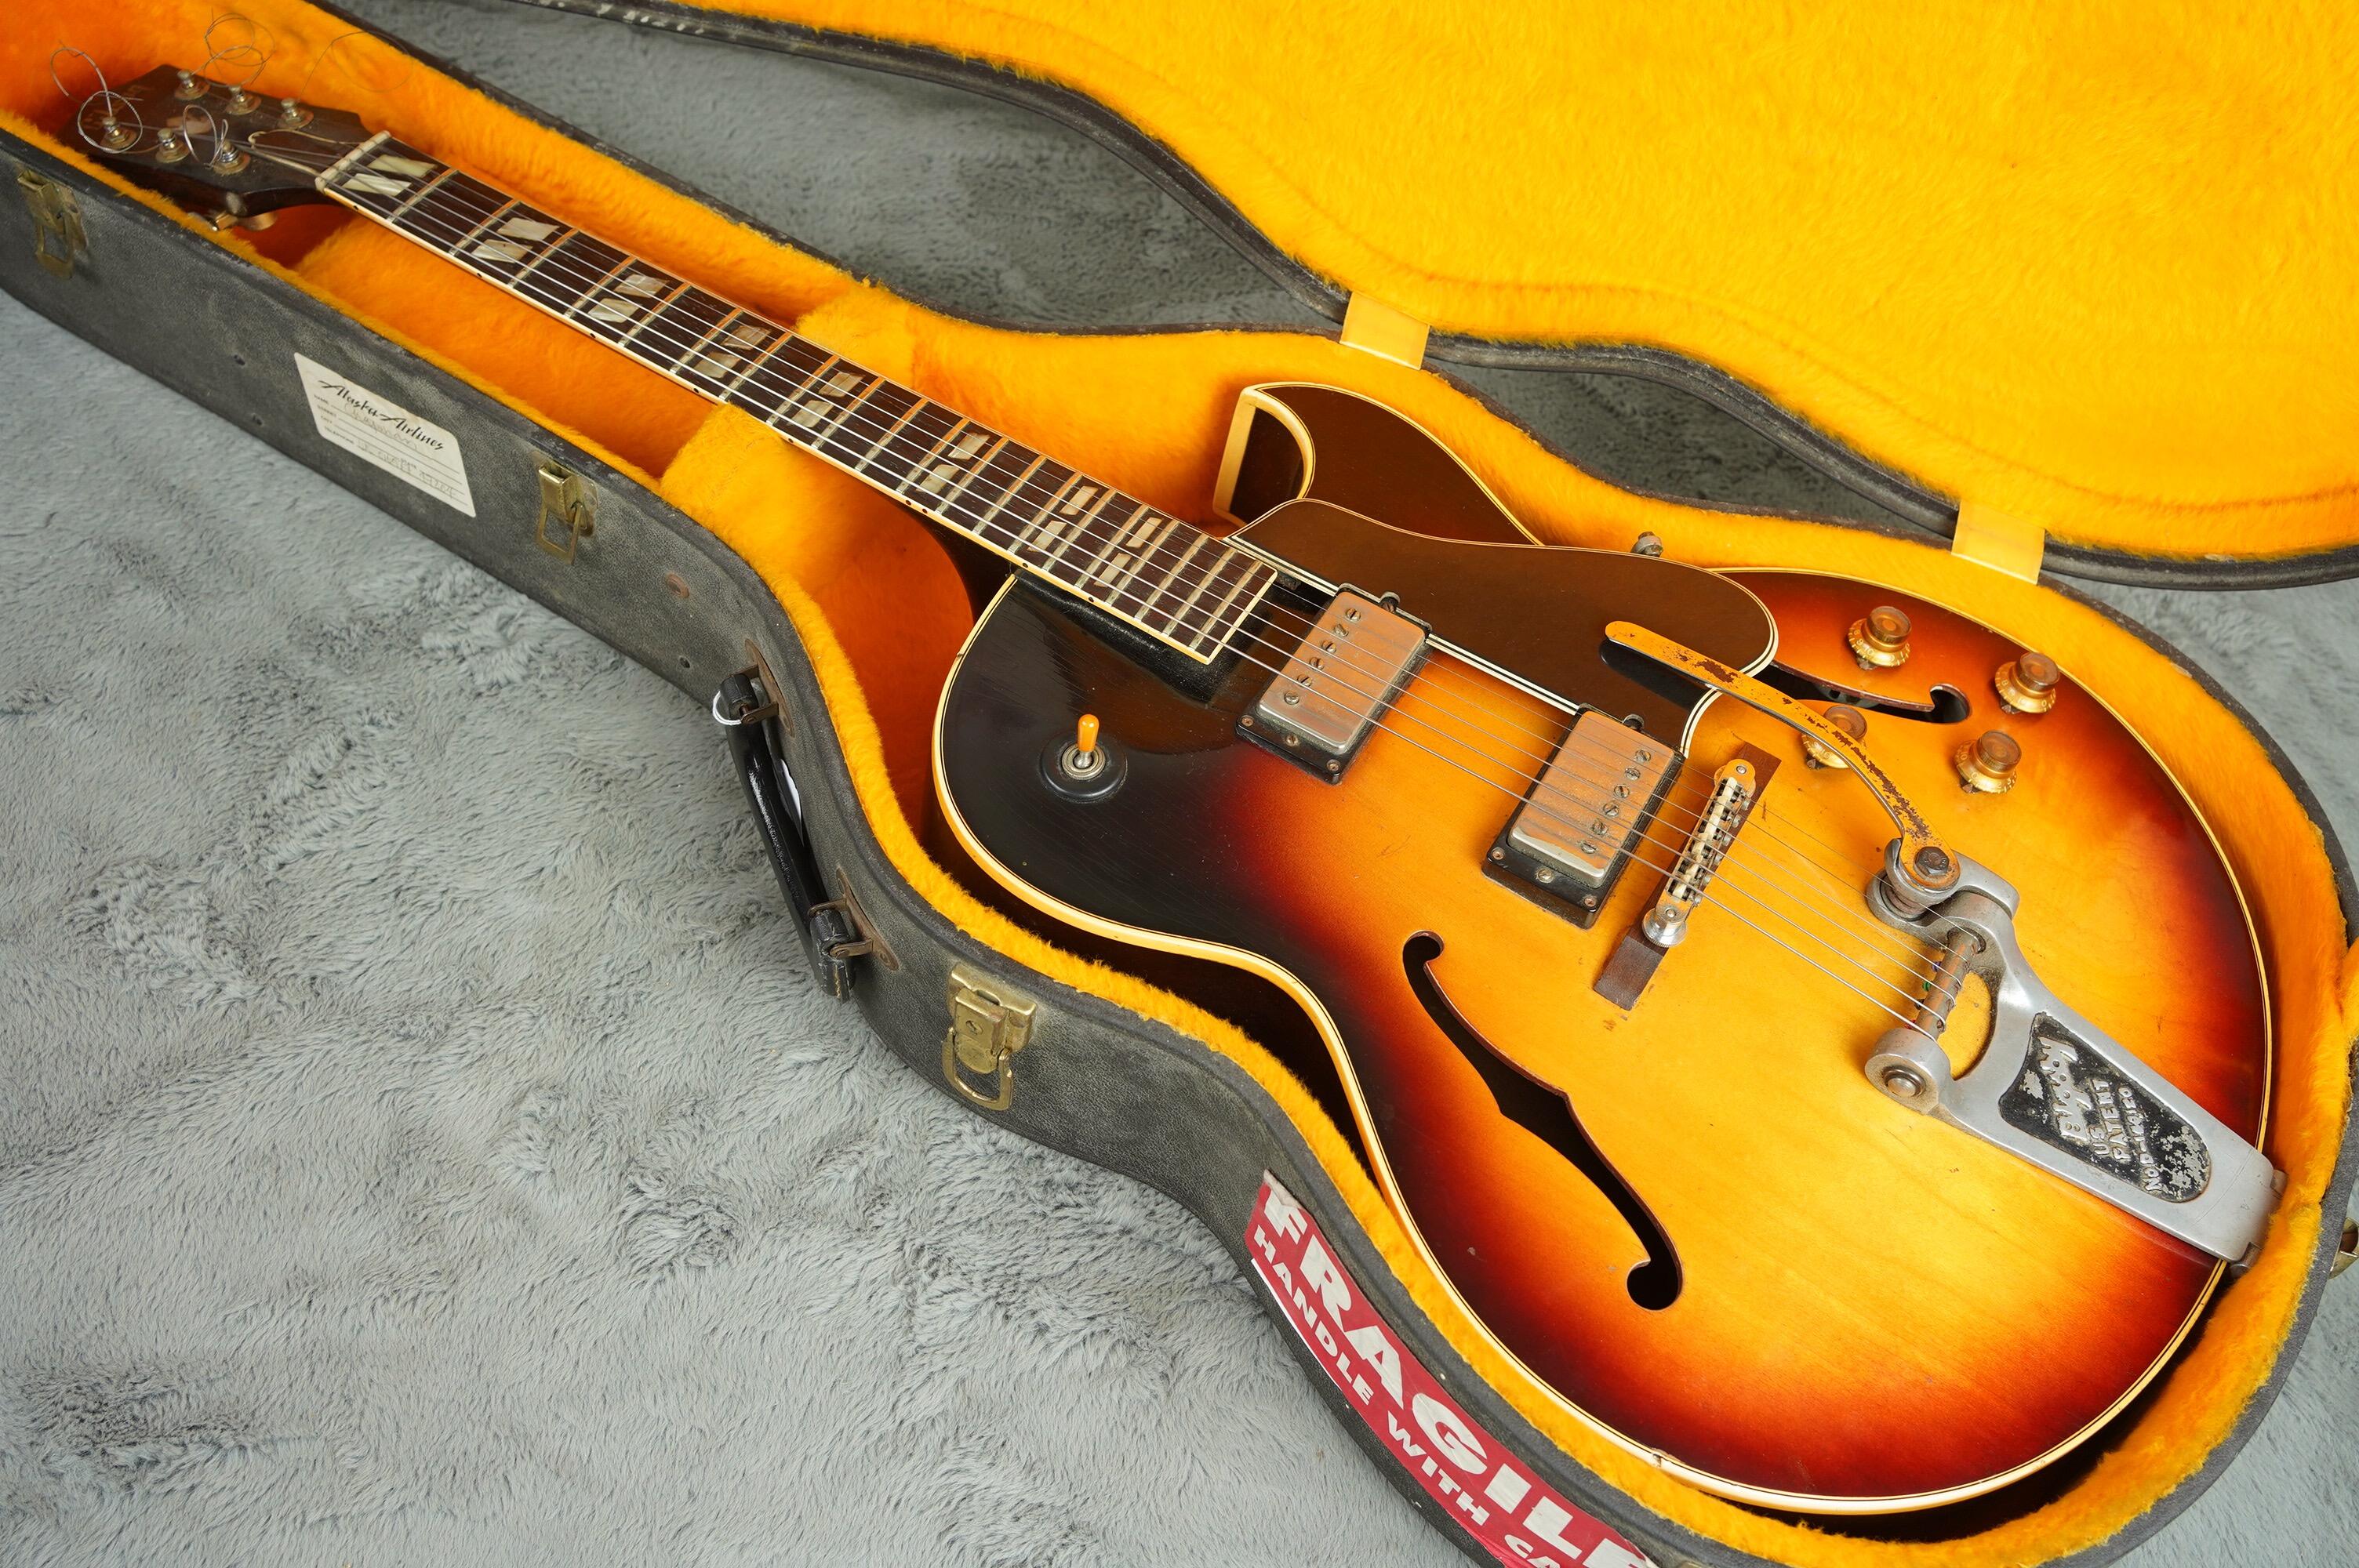 1961 Gibson ES-175D PAF's ex-Michael Chapman